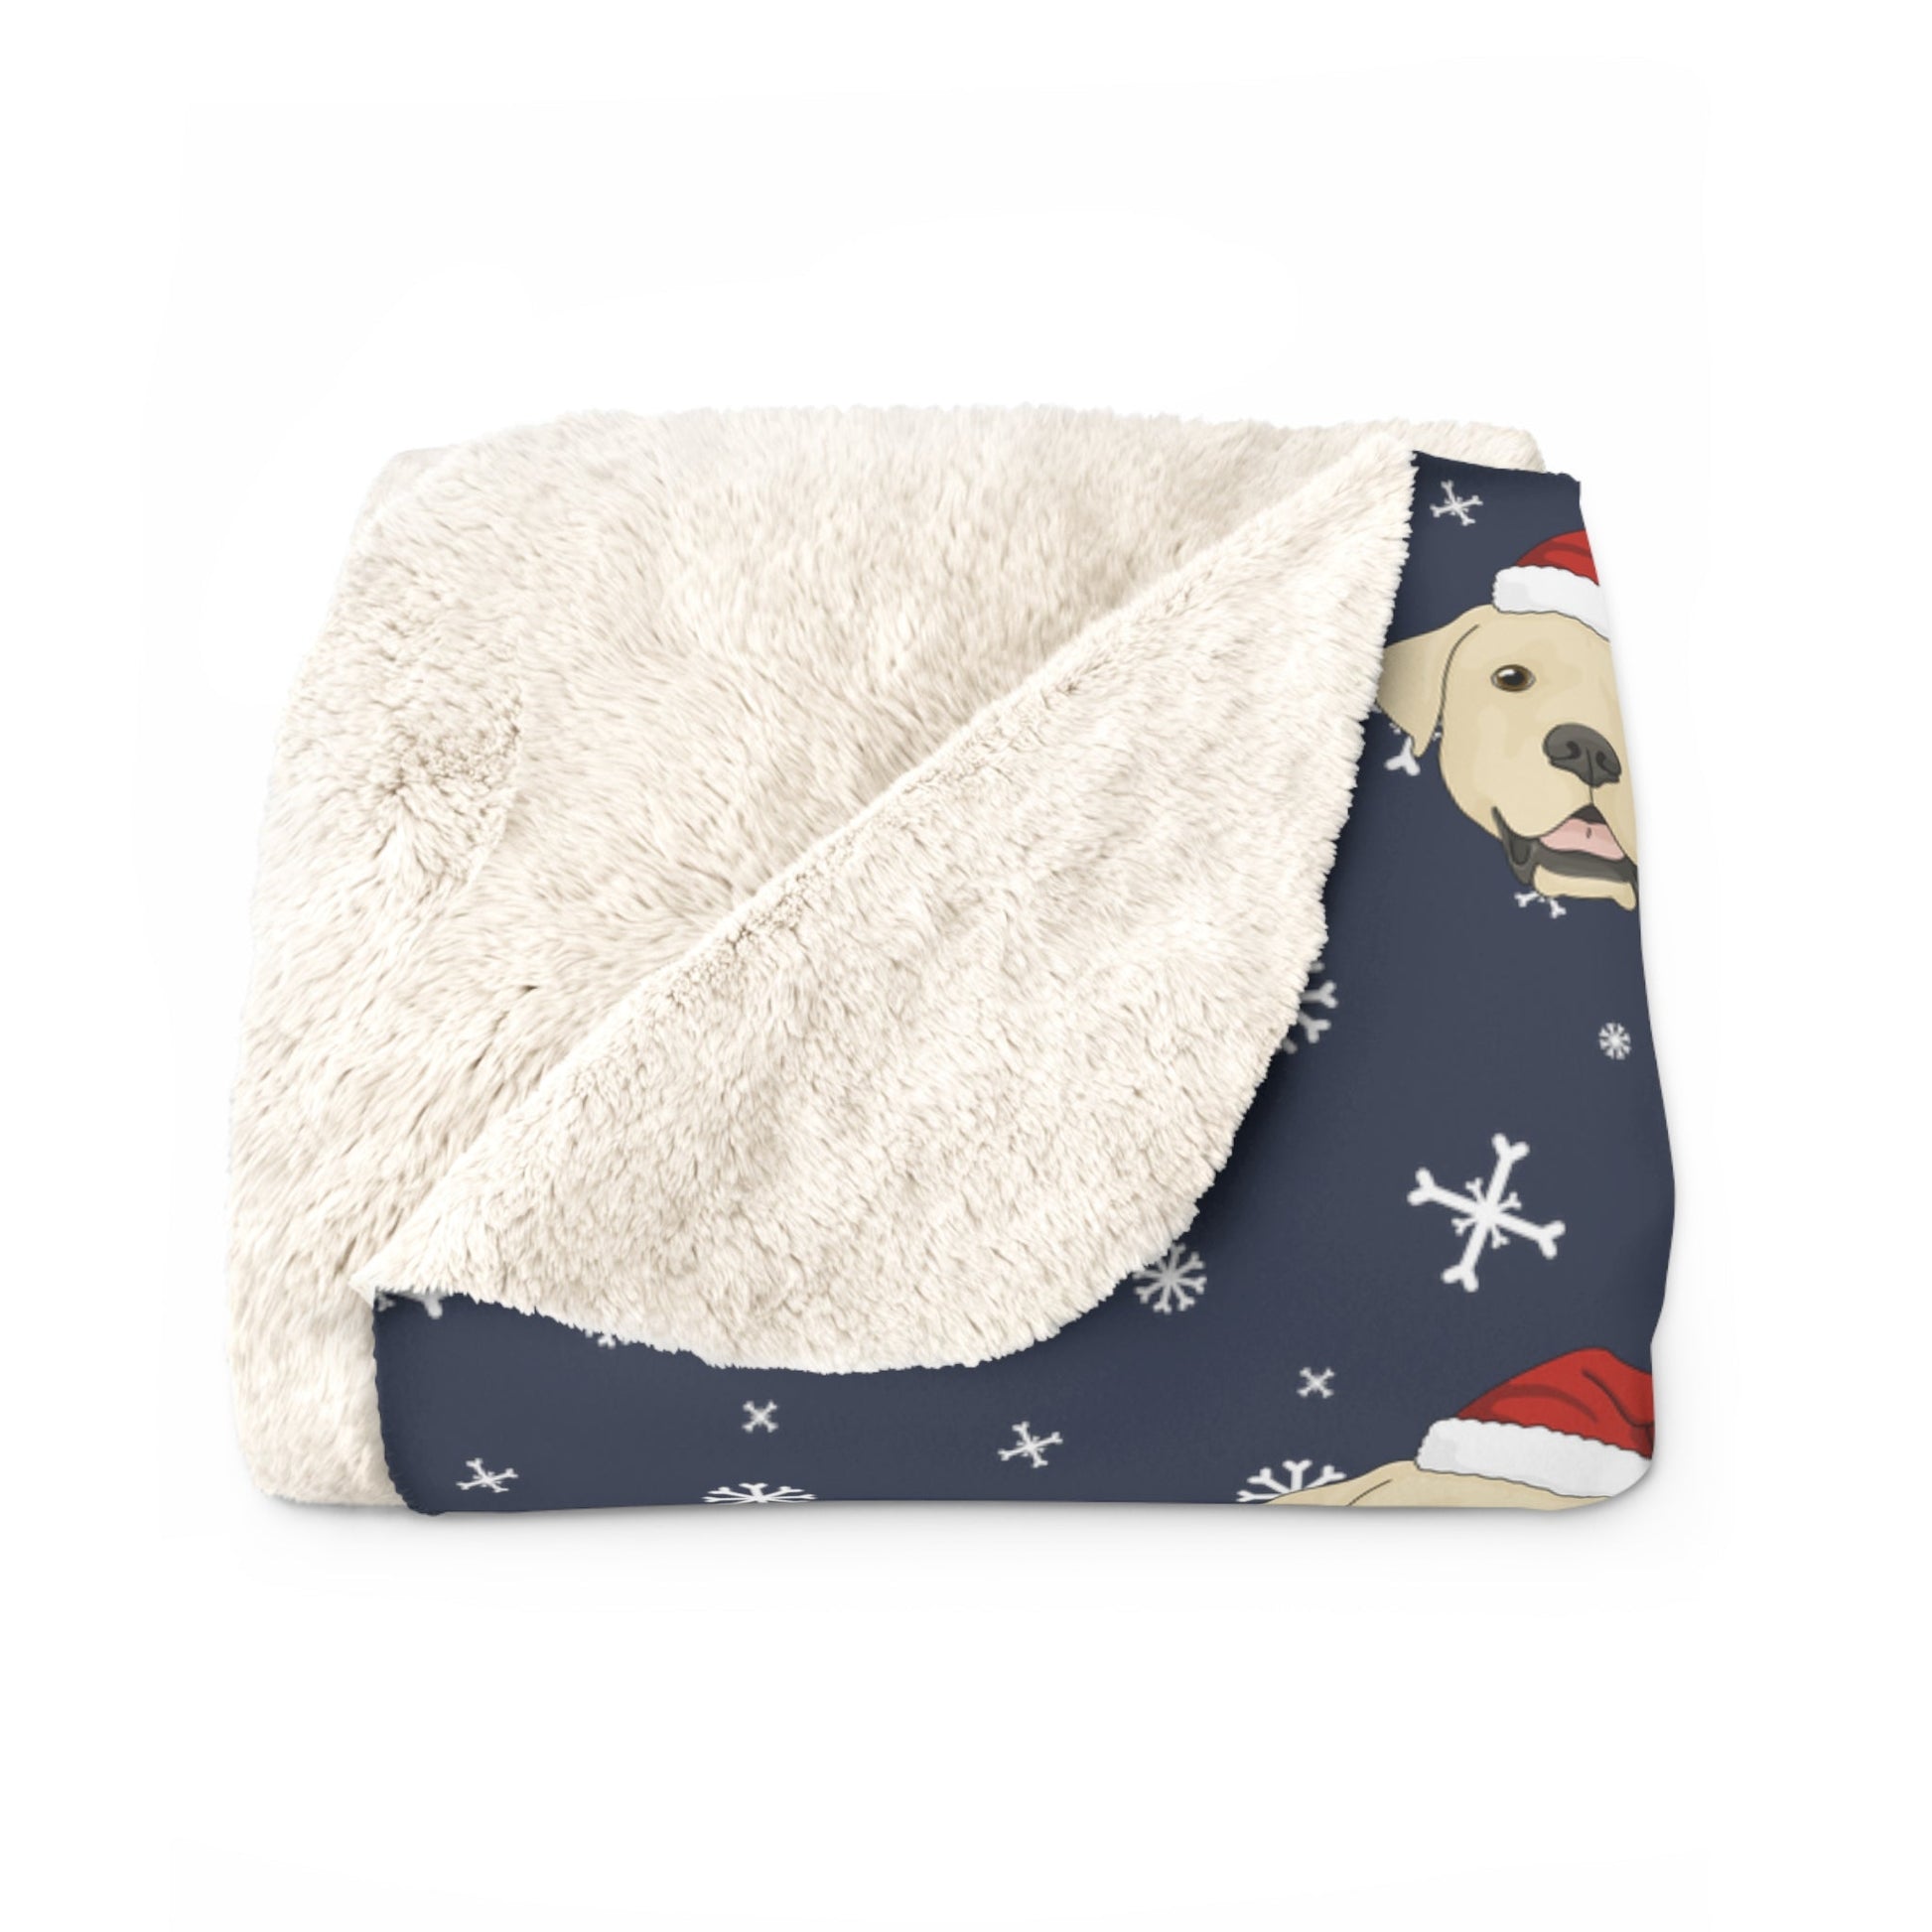 Winter Yellow Labrador Retriever Blanket | Sherpa Fleece - Detezi Designs-34775168816730778601